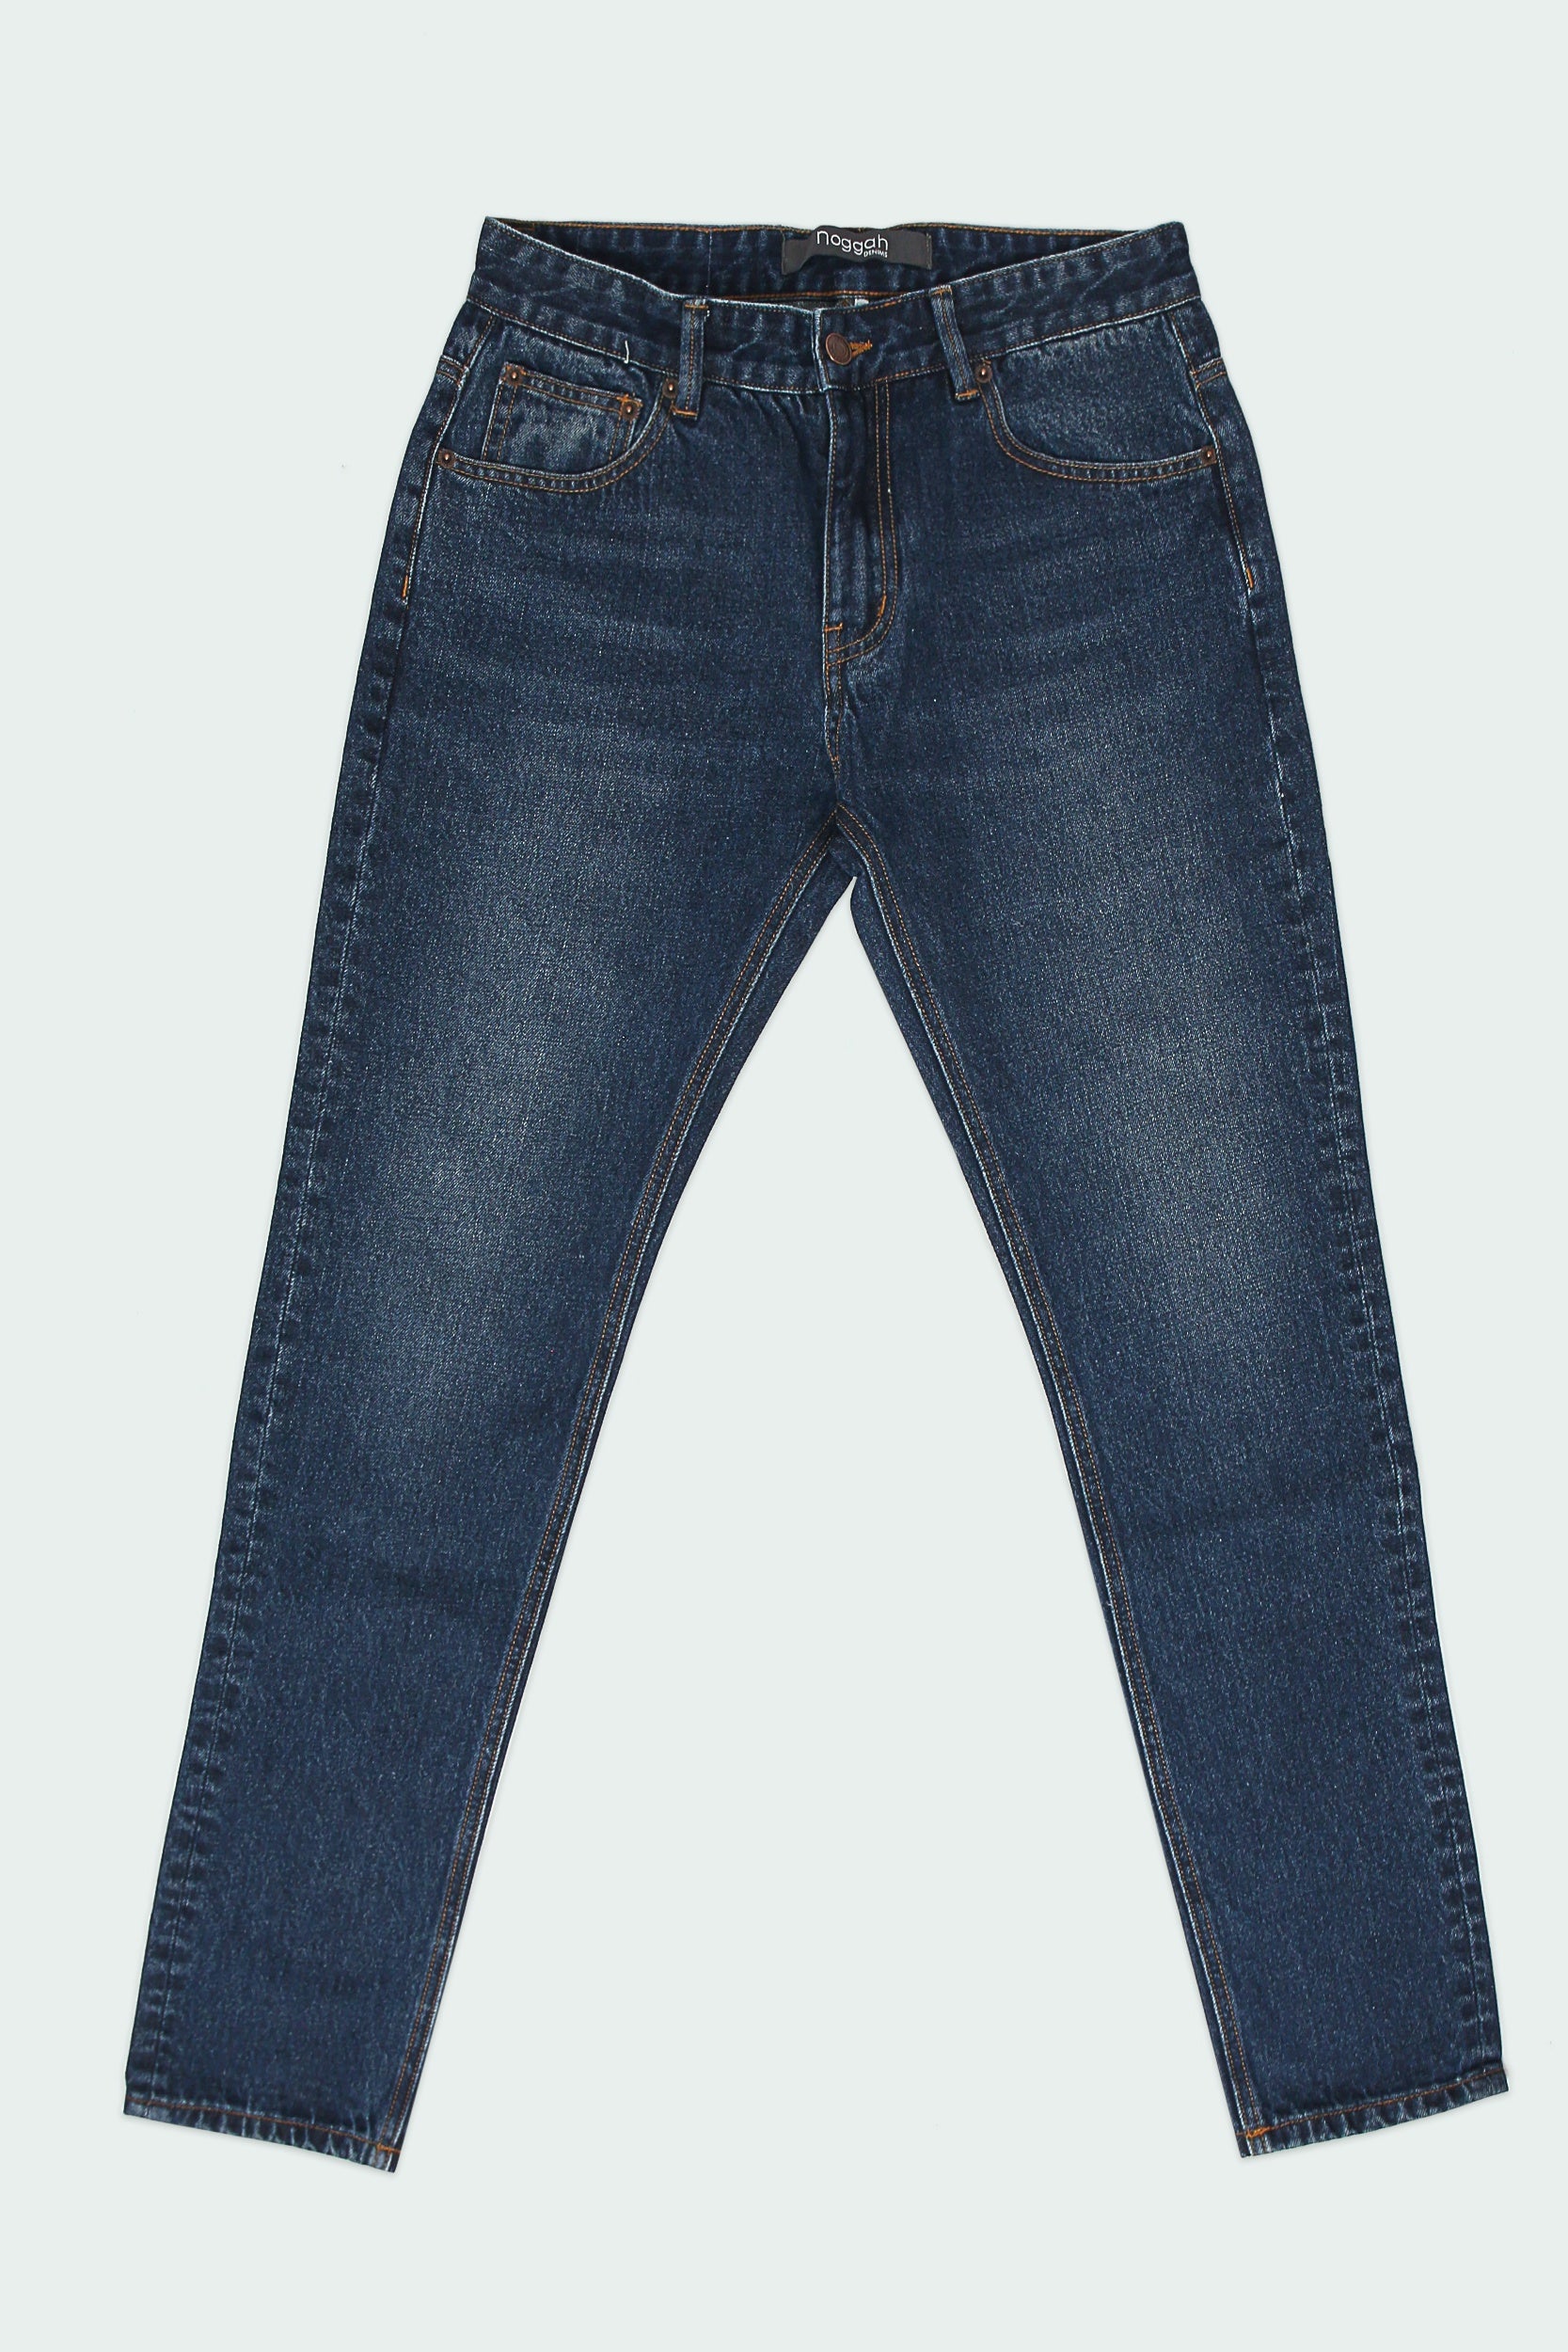 Shpwfbe Men's Jeans Fashion Plus Size Loose Elastic Waist Street Wide Leg  Trousers Jeans For Men Casual Pants - Walmart.com